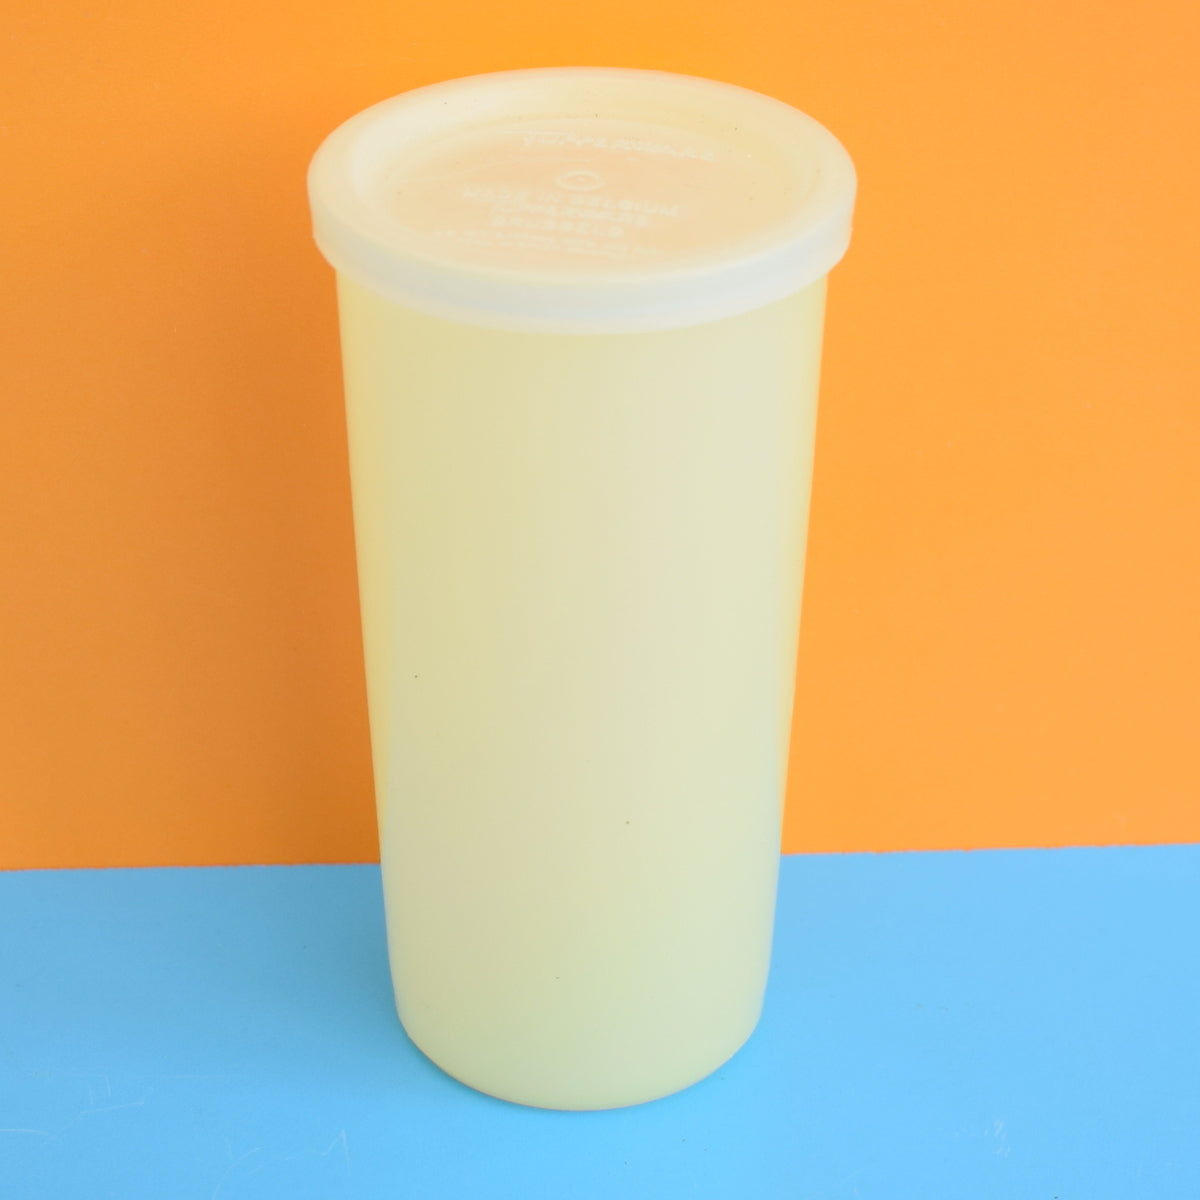 Vintage 1960s Plastic Tupperware Beakers - Pastel Shades